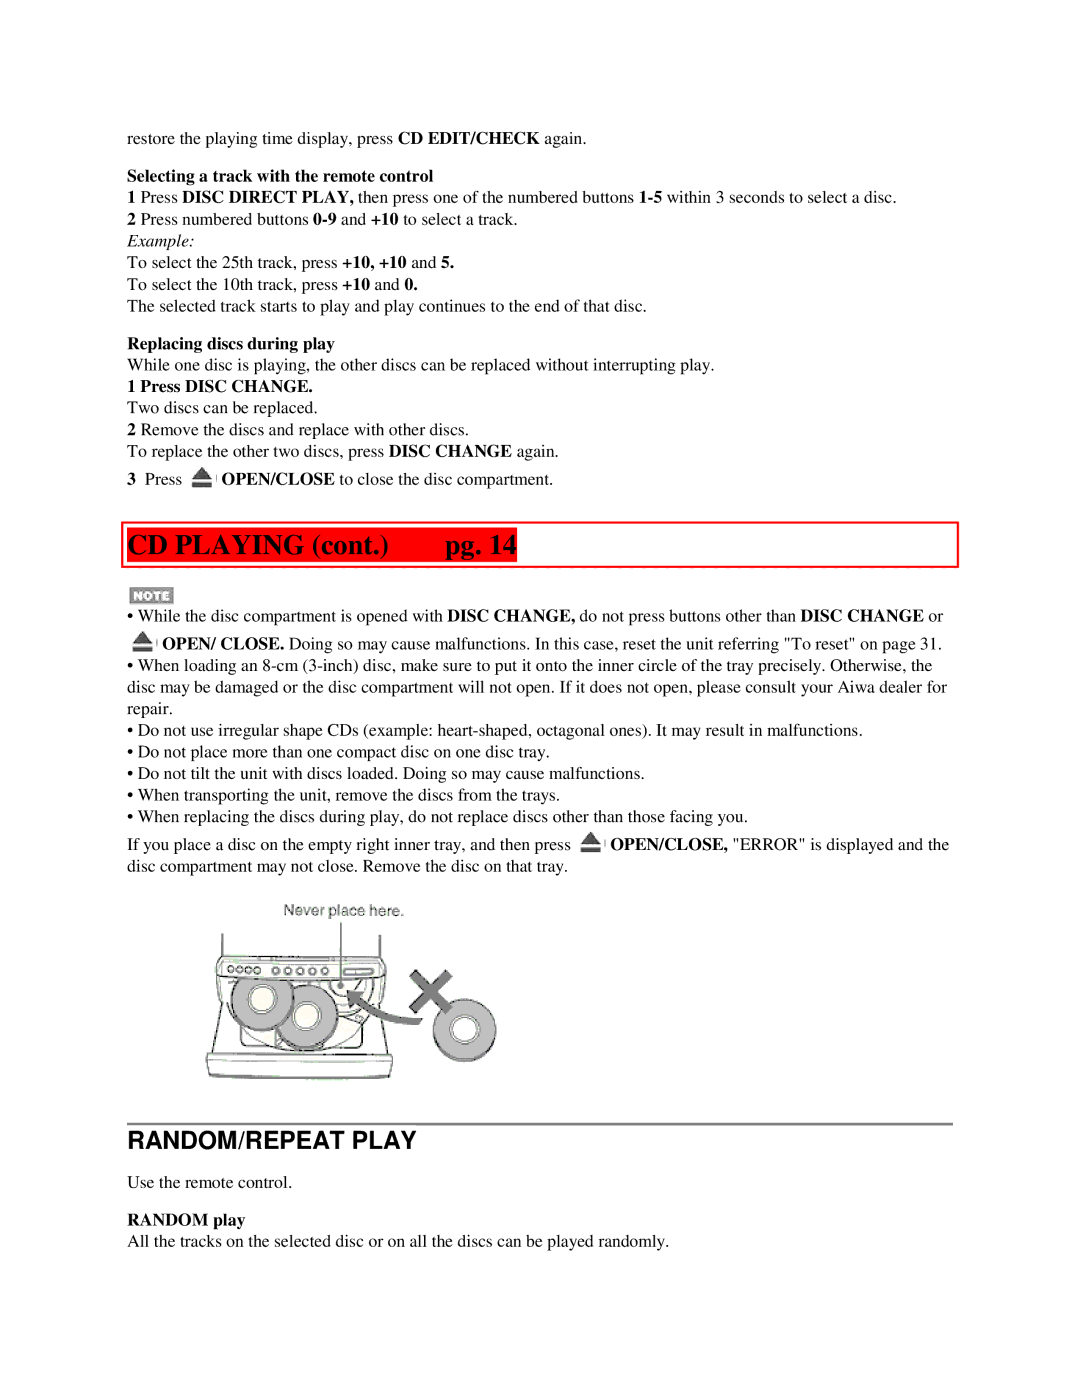 Aiwa NSX-MTD9 manual CD Playing, RANDOM/REPEAT Play 